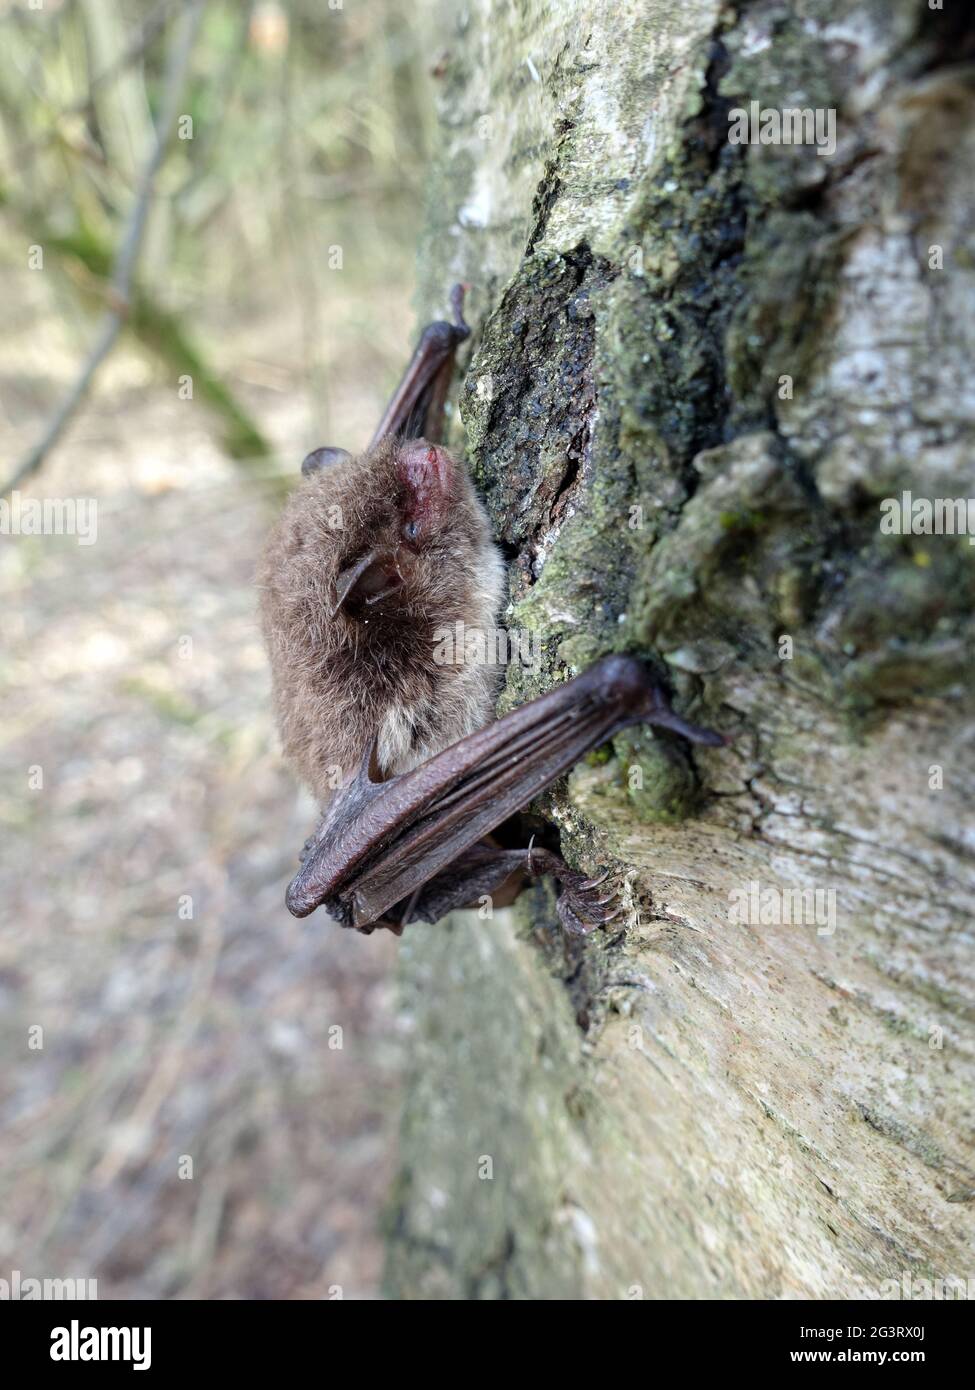 Daubenton's bat (Myotis daubentonii) , clasped to the trunk of a birch tree Stock Photo